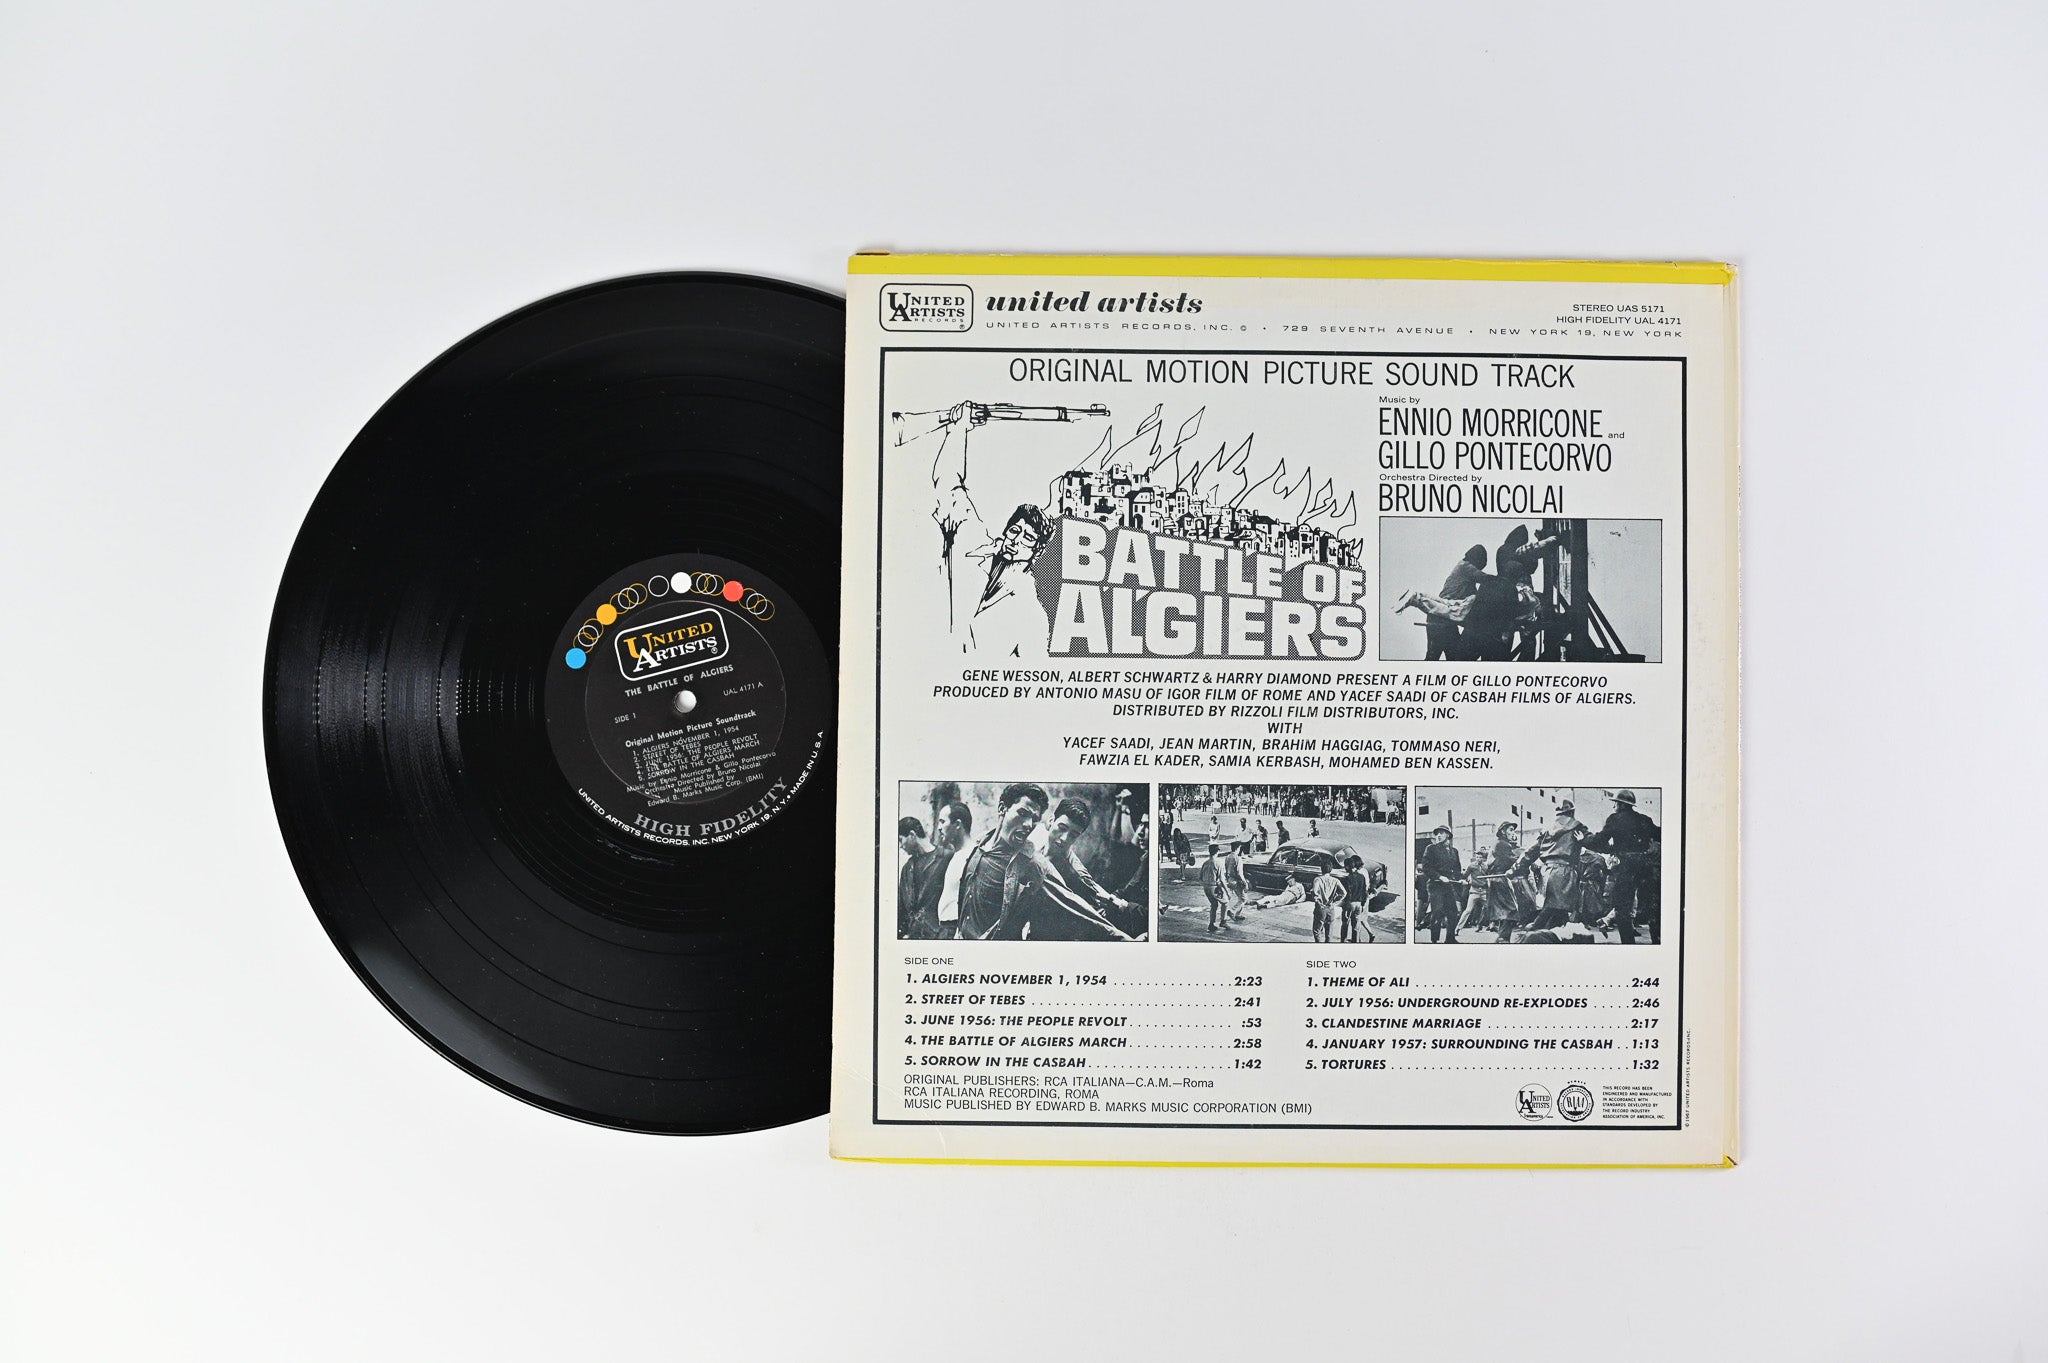 Ennio Morricone - Battle Of Algiers - Original Motion Picture Soundtrack on United Artists Records